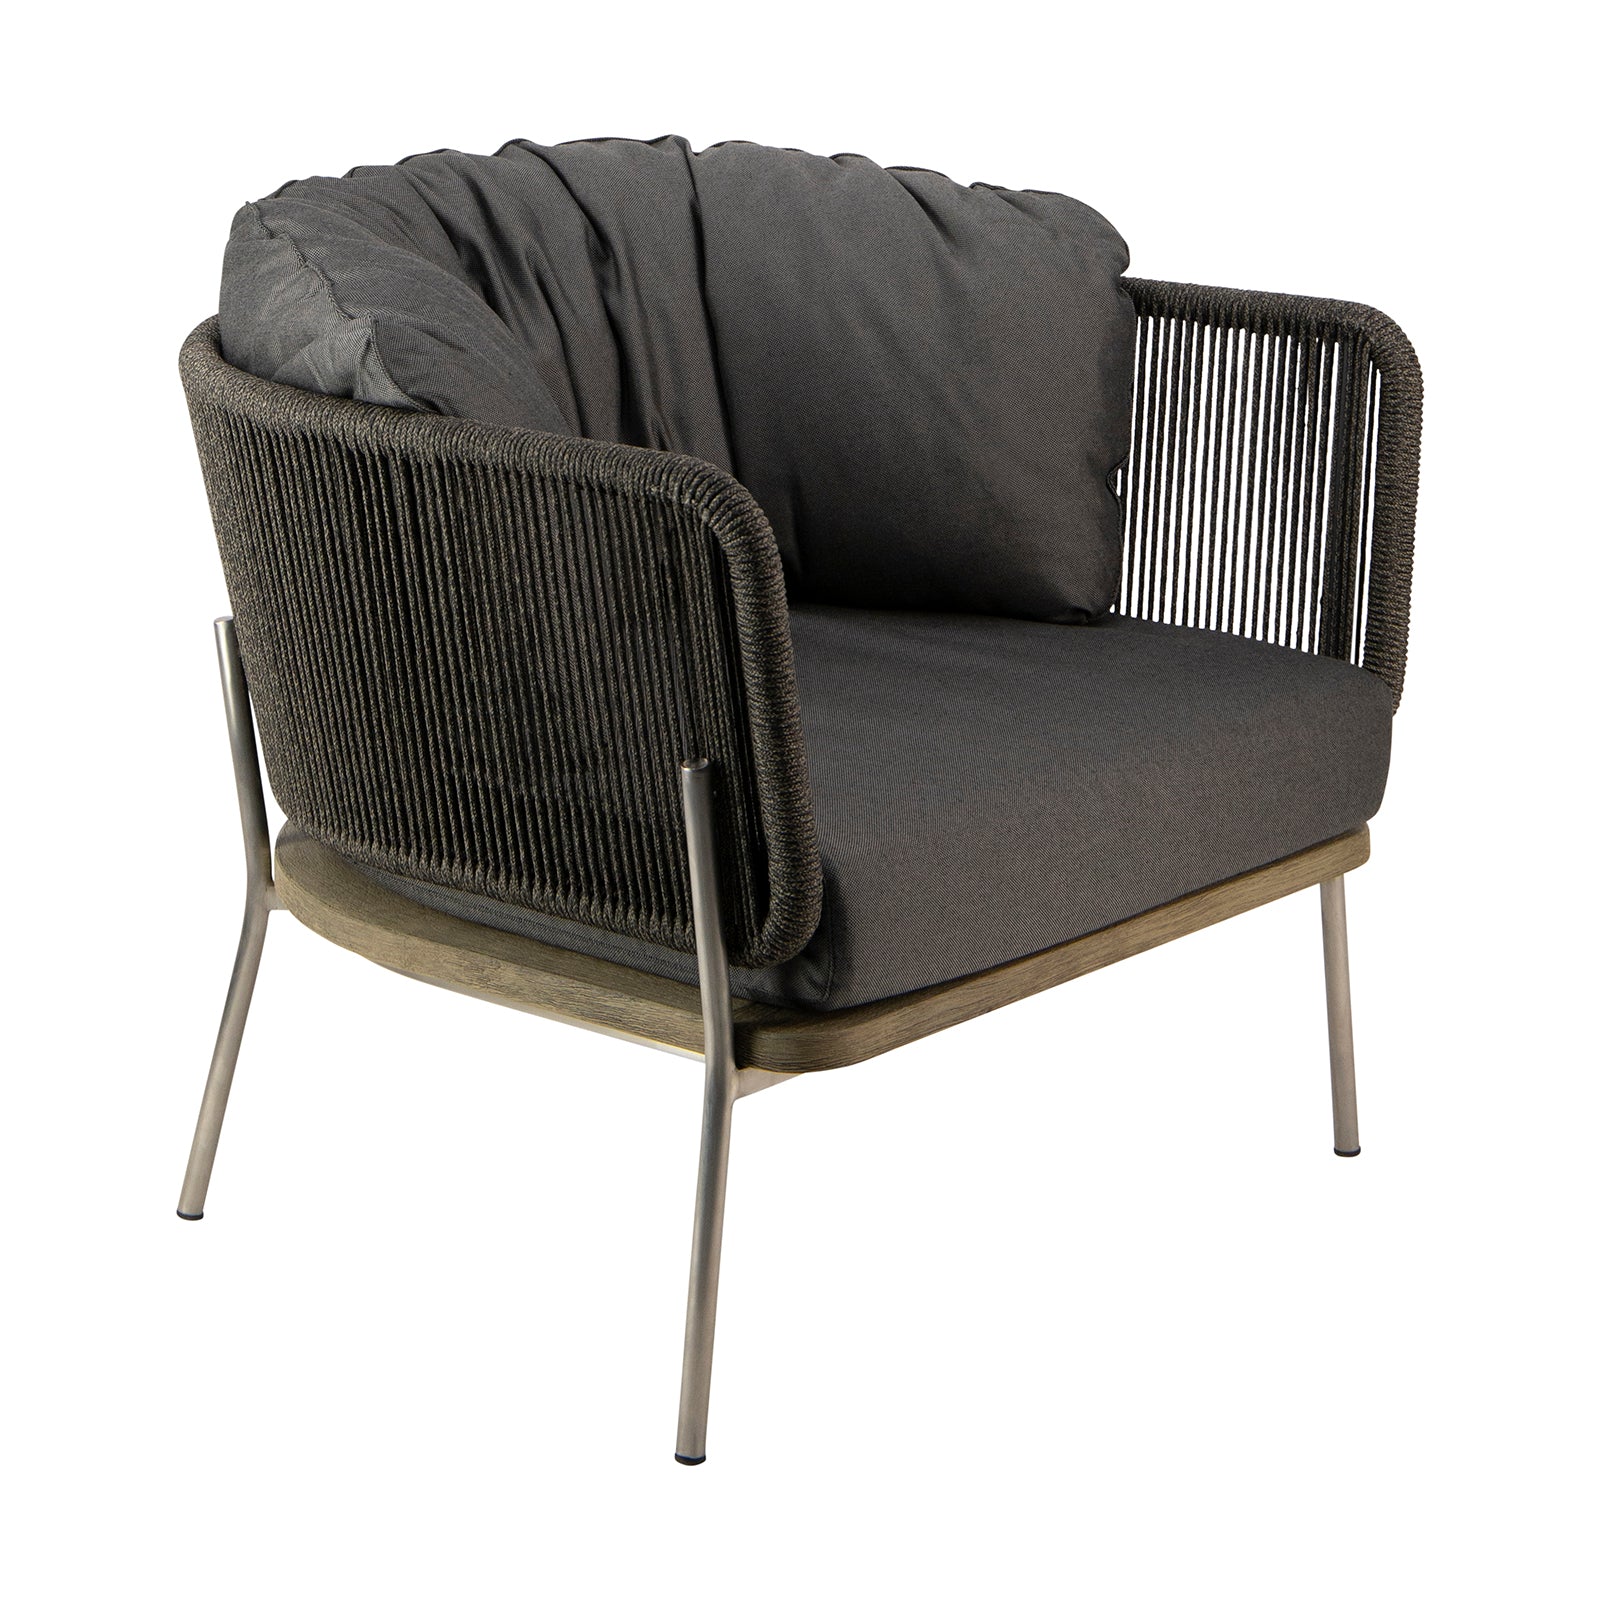 Studio Rope Relaxing Chair Vertical Weave in Charcoal (Agora Panama Coal)